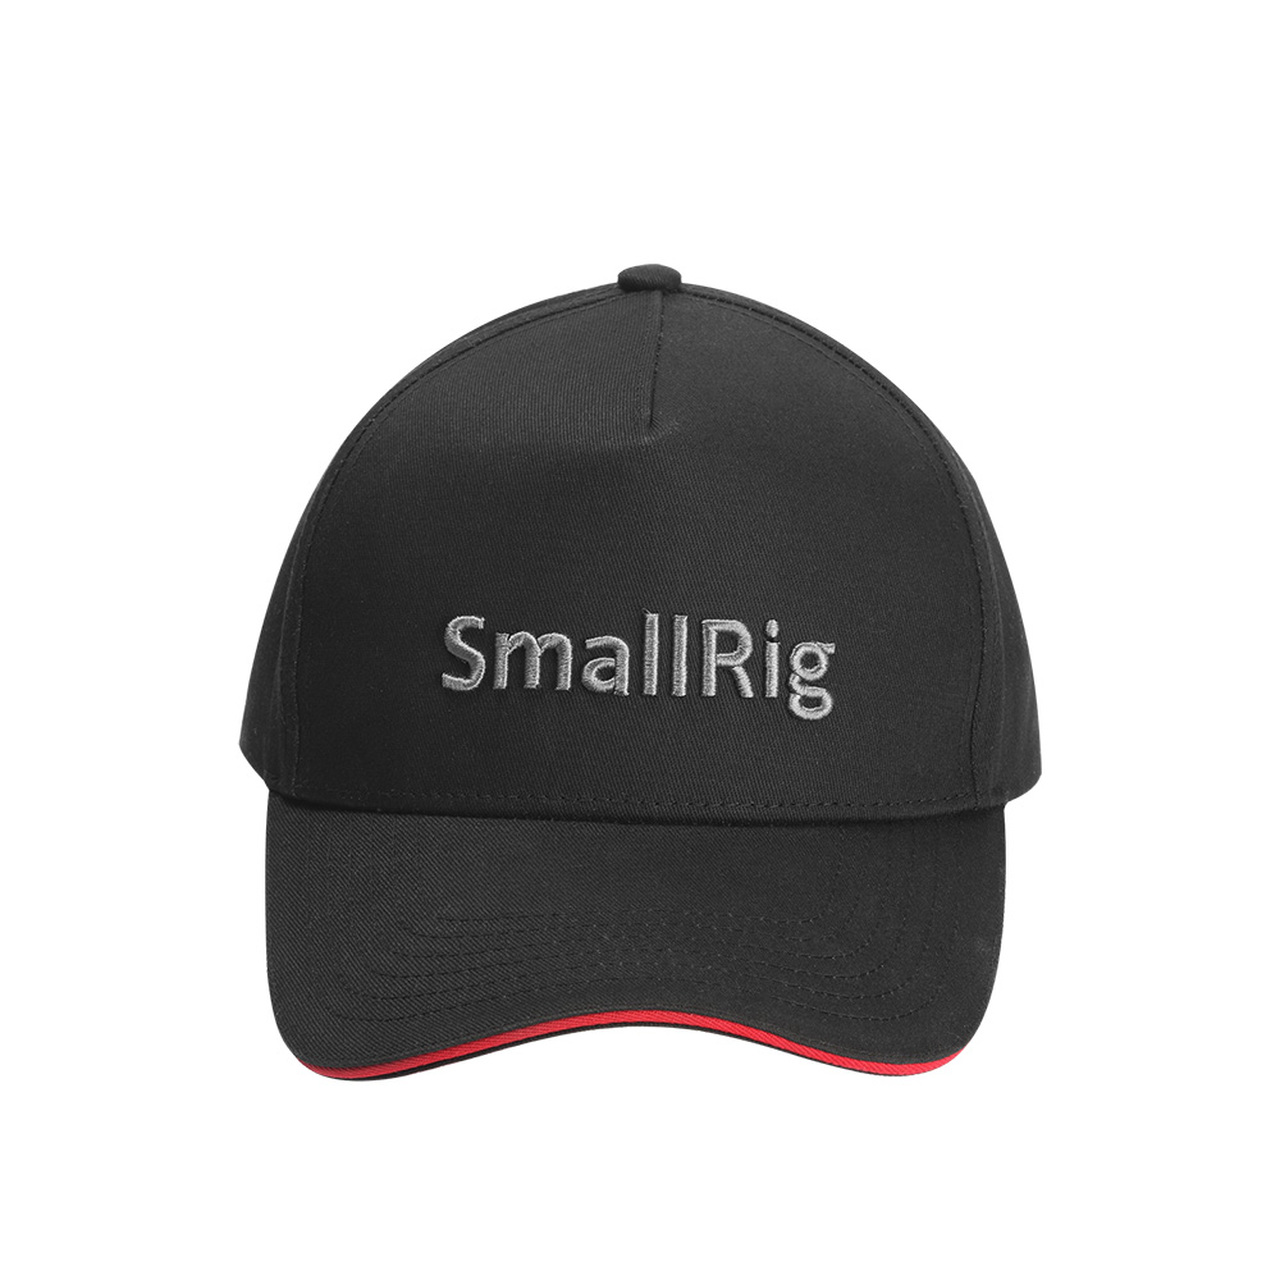 SmallRig Logo Baseball Cap PCC2462 หมวกแก๊ปของแท้ลิขสิทธิ์ SmallRig ป้องกันแสงแดดสำหรับถ่ายวิดีโอกลางแจ้ง ผ้าฝ้ายใส่สบาย แถบซับเหงื่อ ราคา 290 บาท